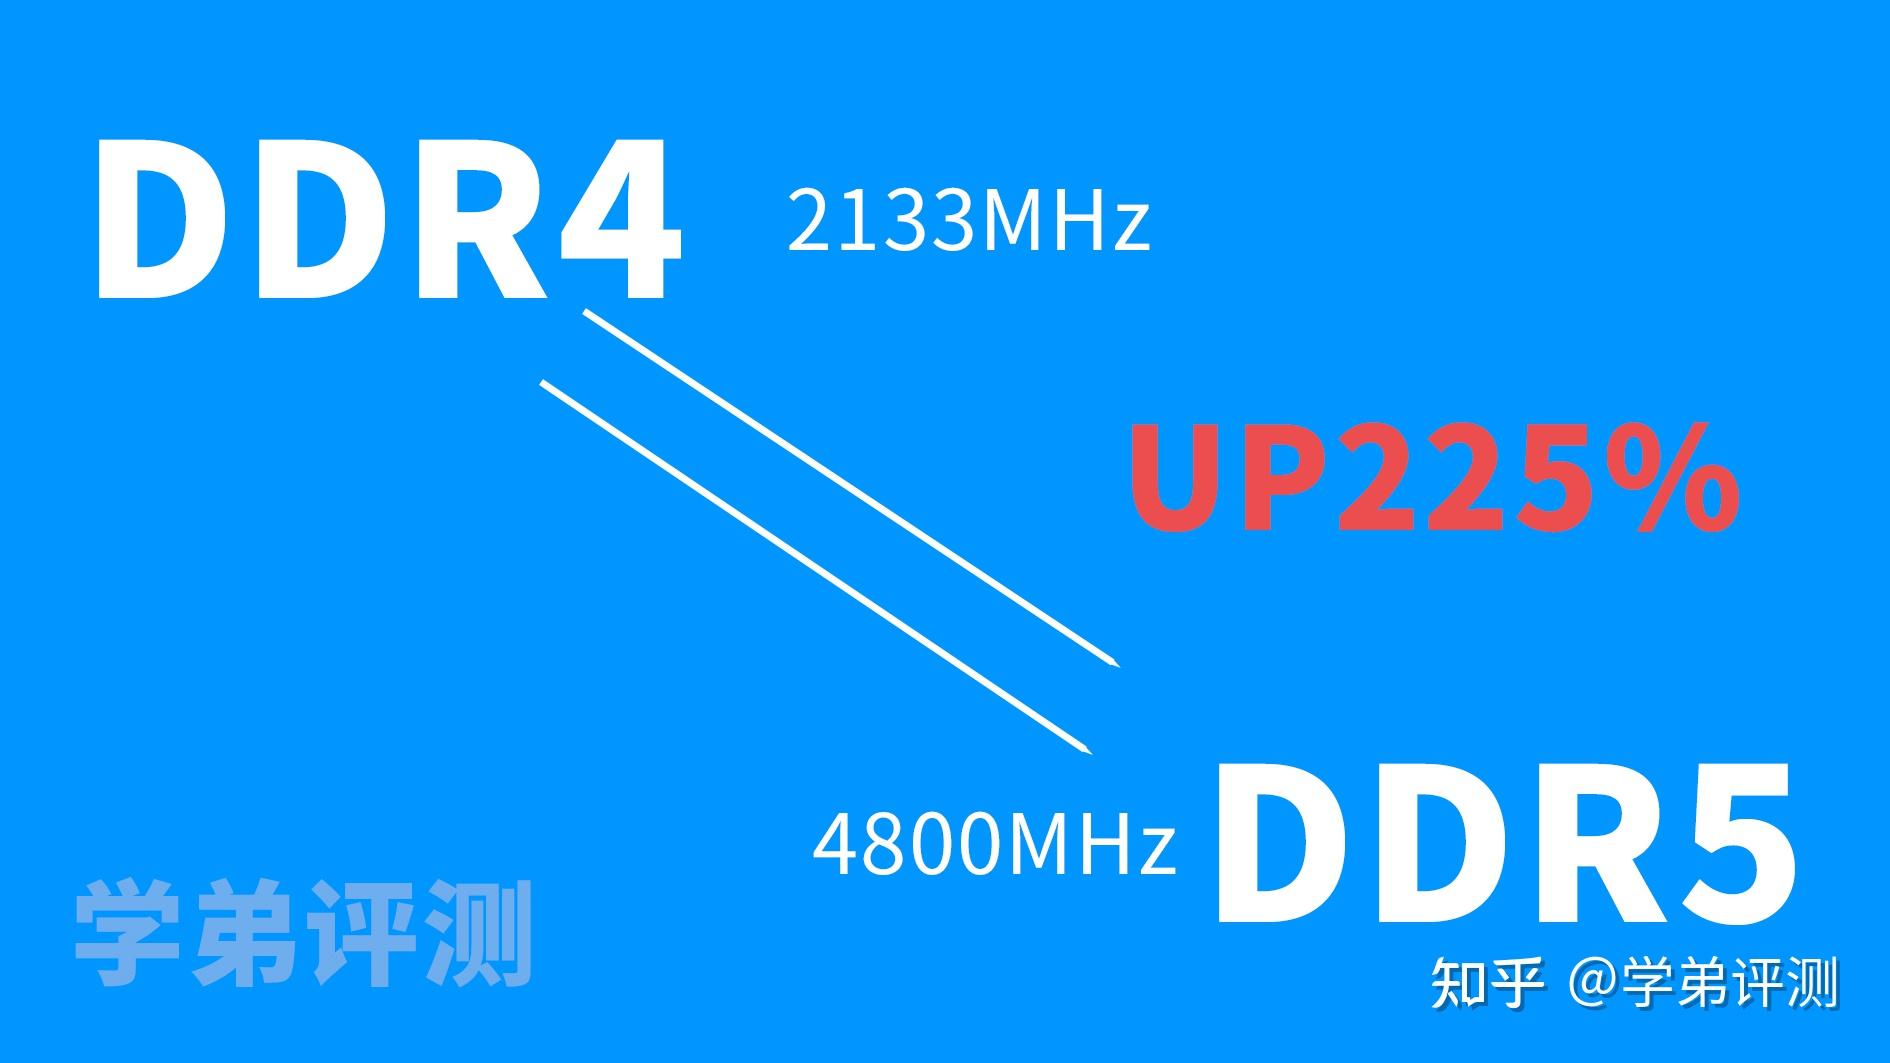 ddr5多久才成熟 追踪 DDR5 内存发展轨迹：起源、突破与未来展望  第2张